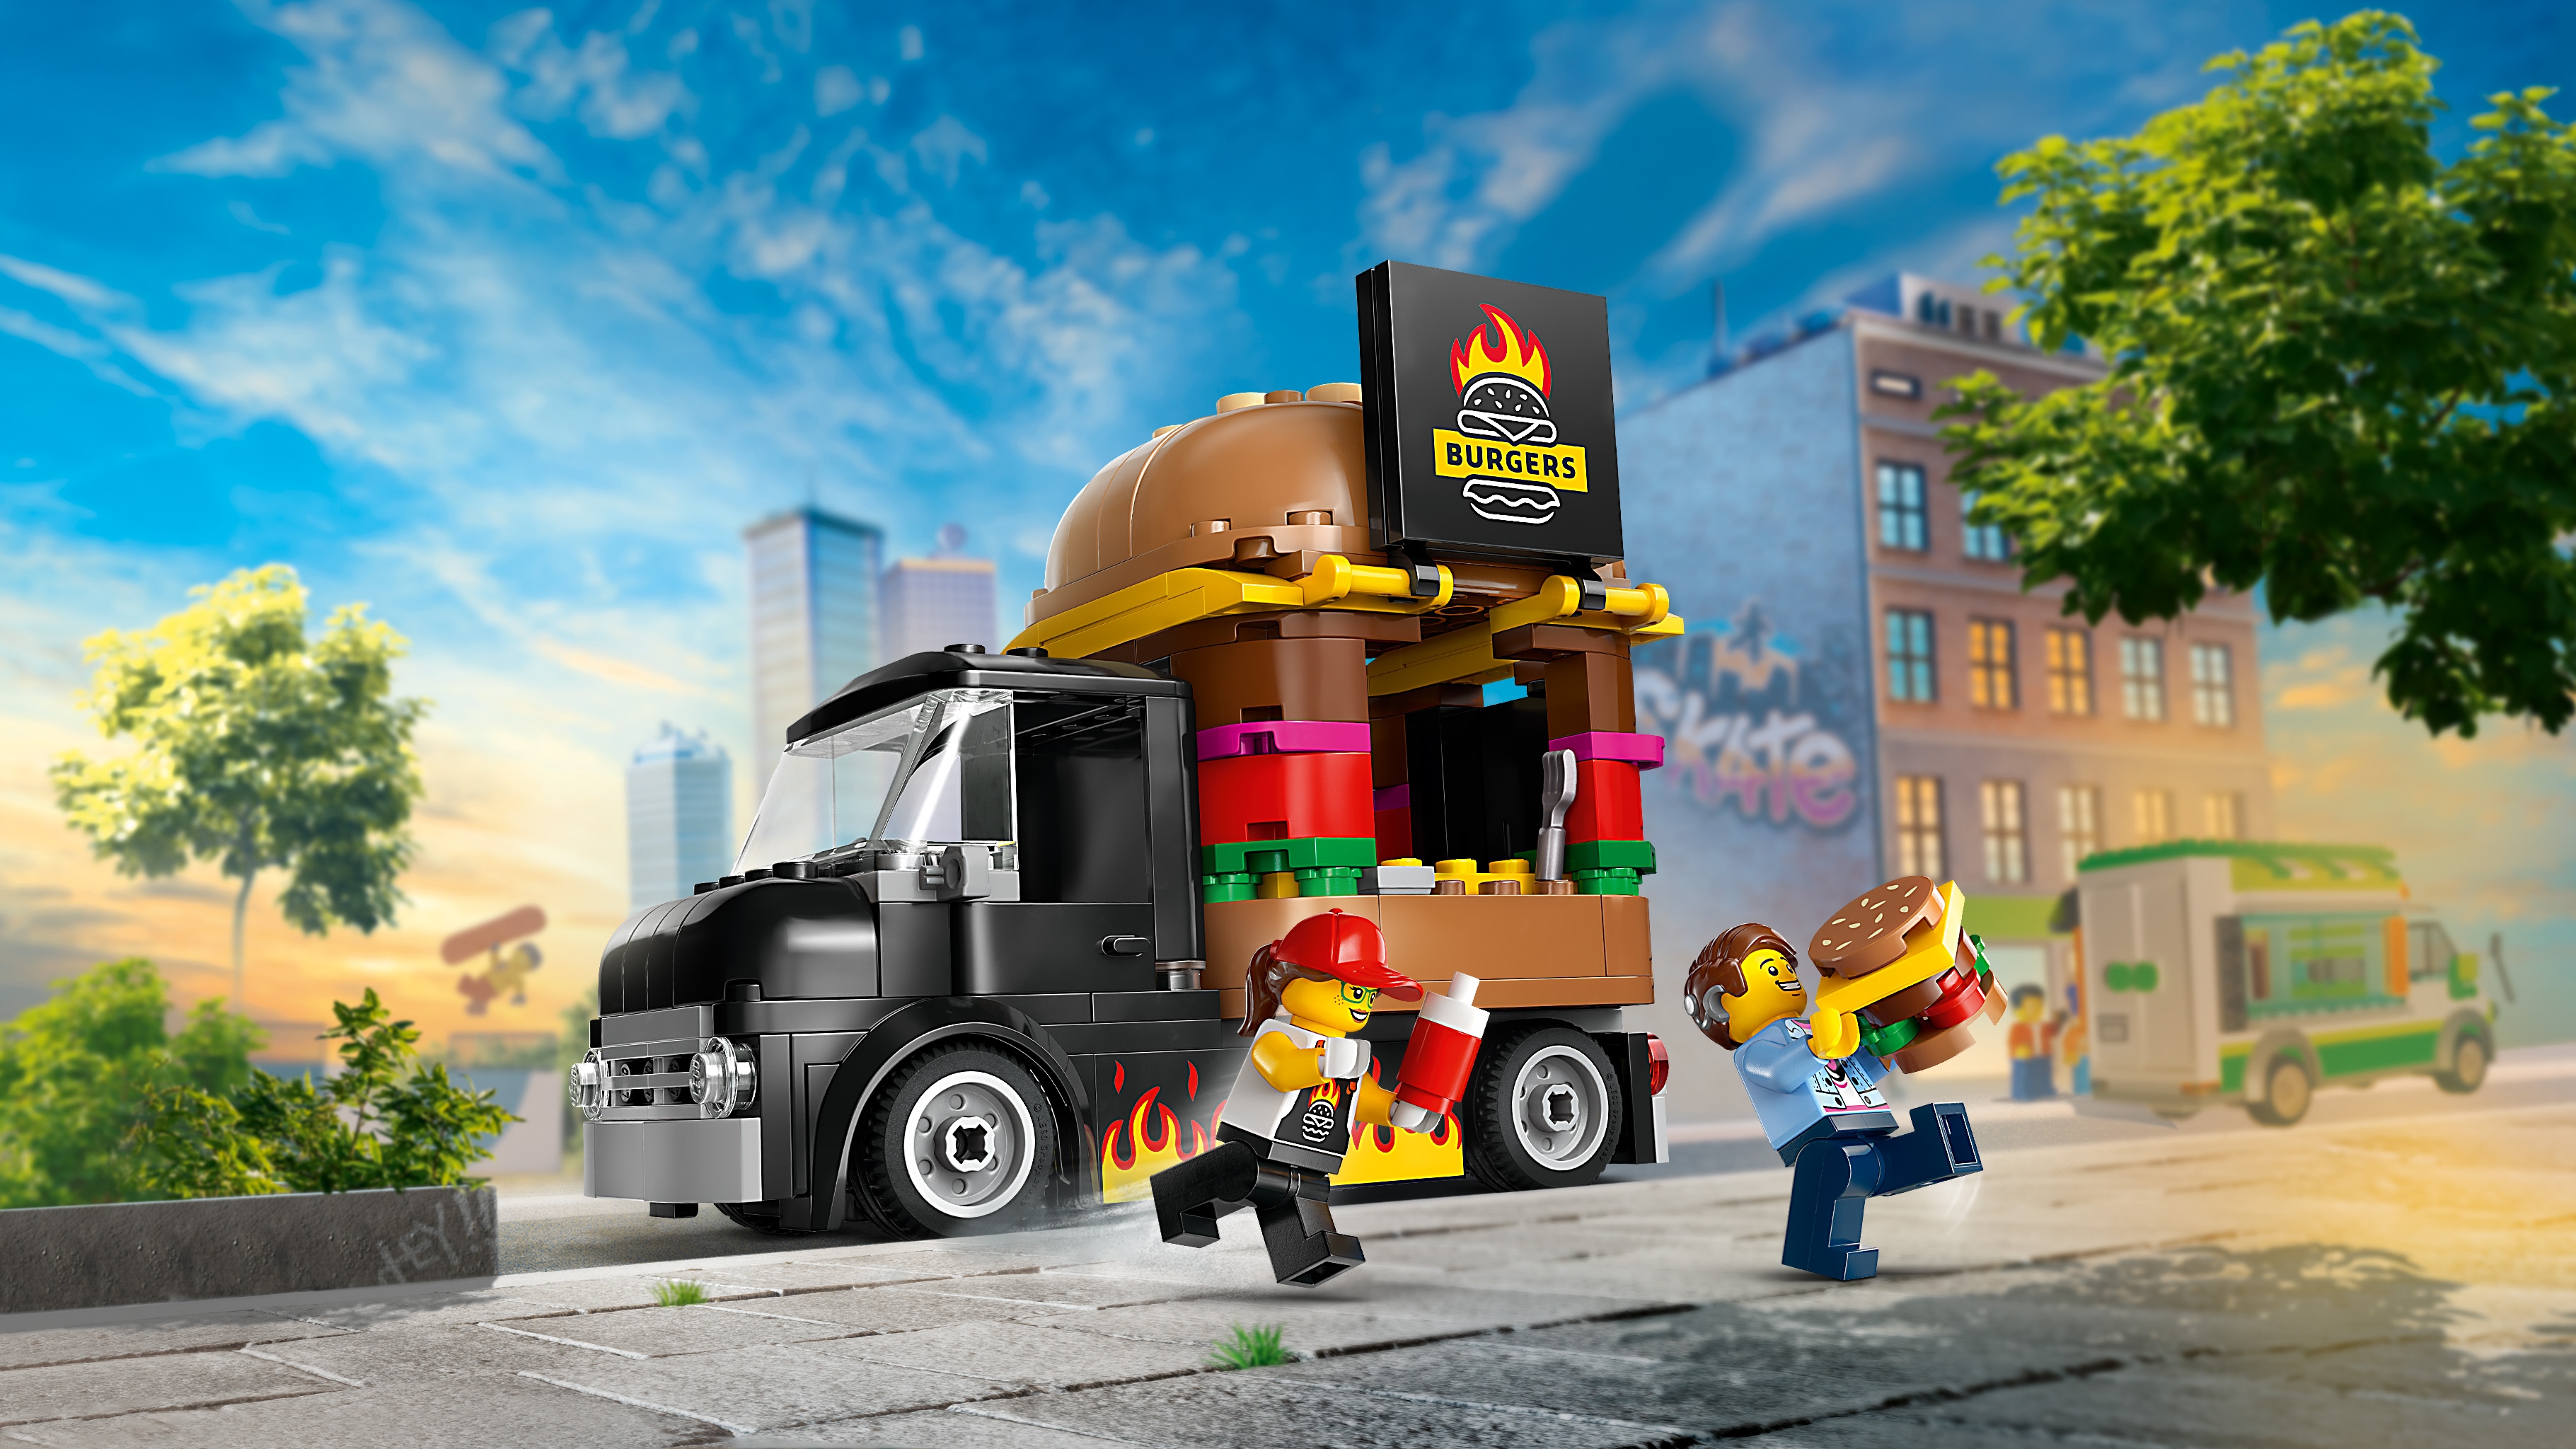 Burger Truck - Videos - LEGO.com for kids